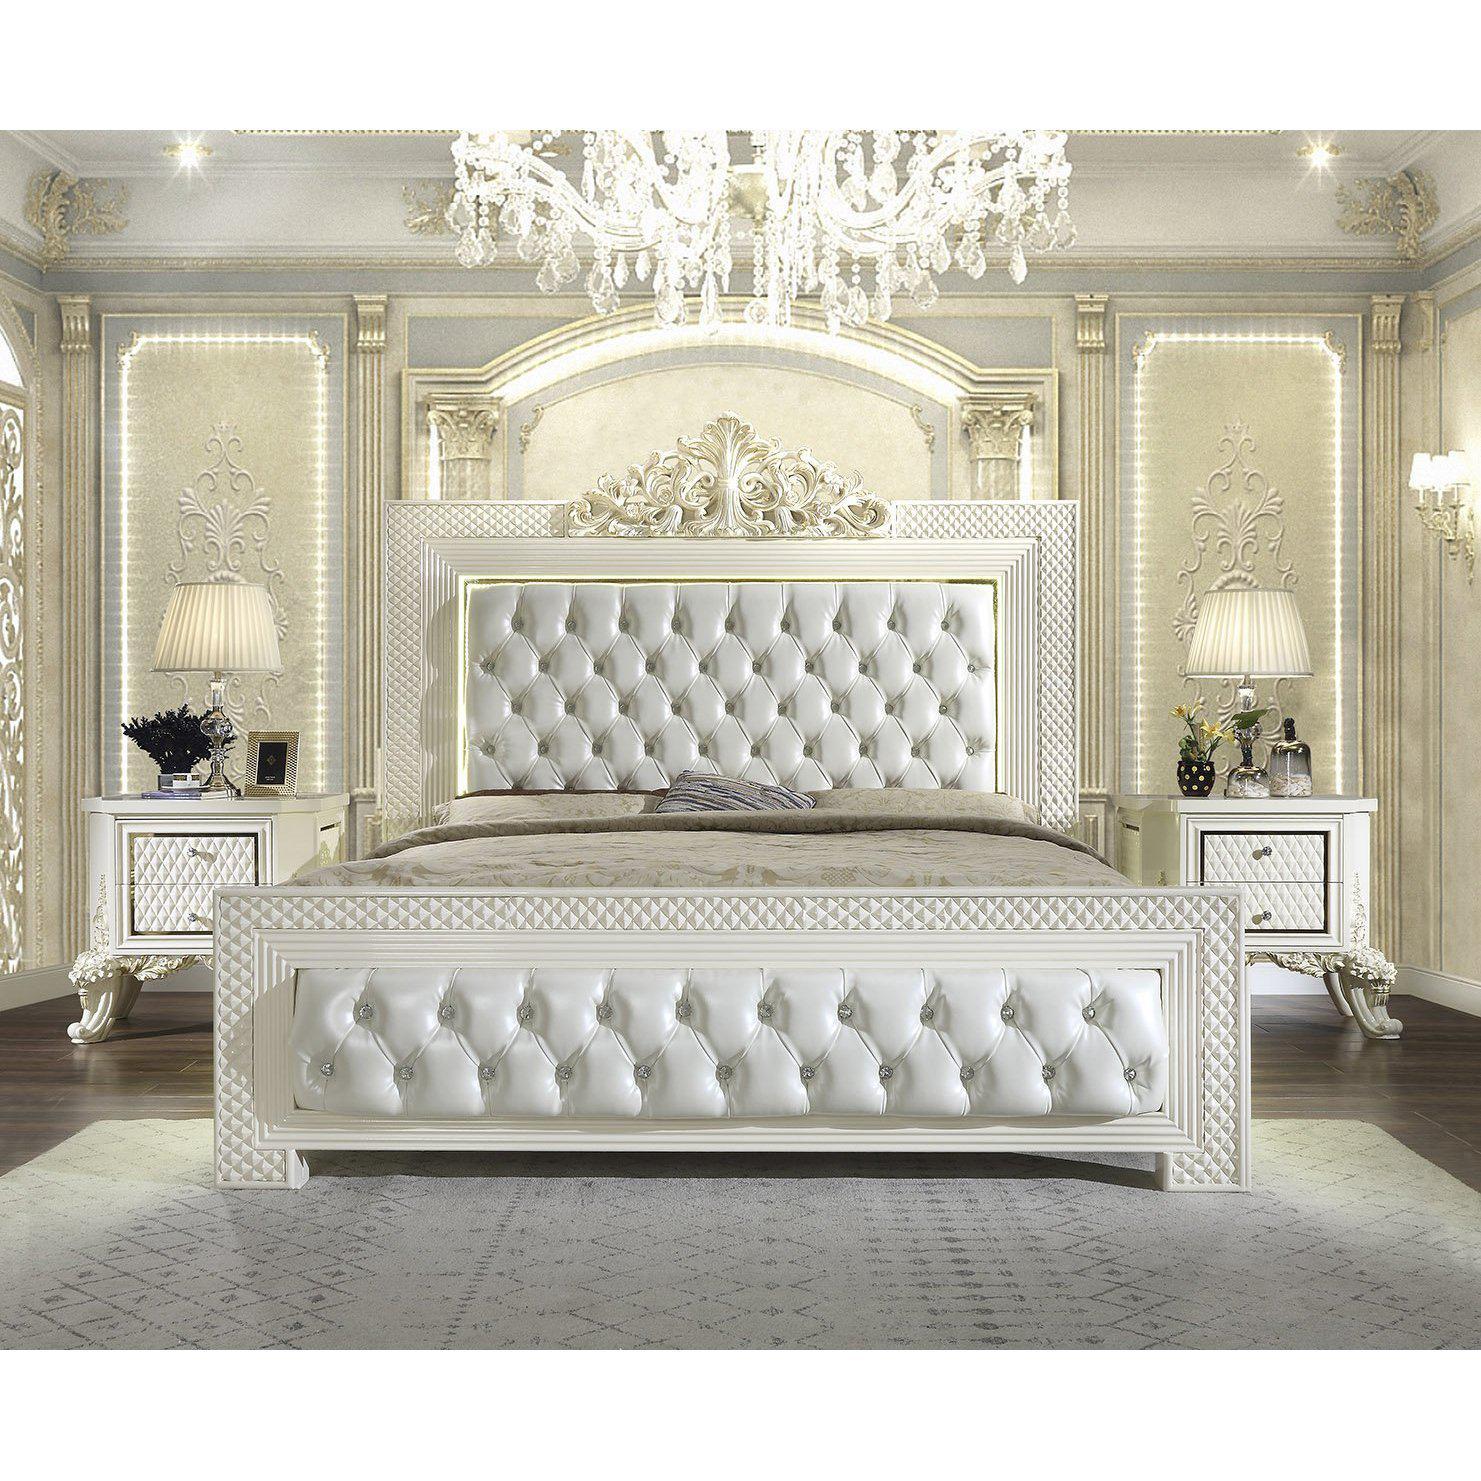 Homey Design Luxury Hd-8091 - Ck 5Pc Bedroom Set-Iron Home Concepts